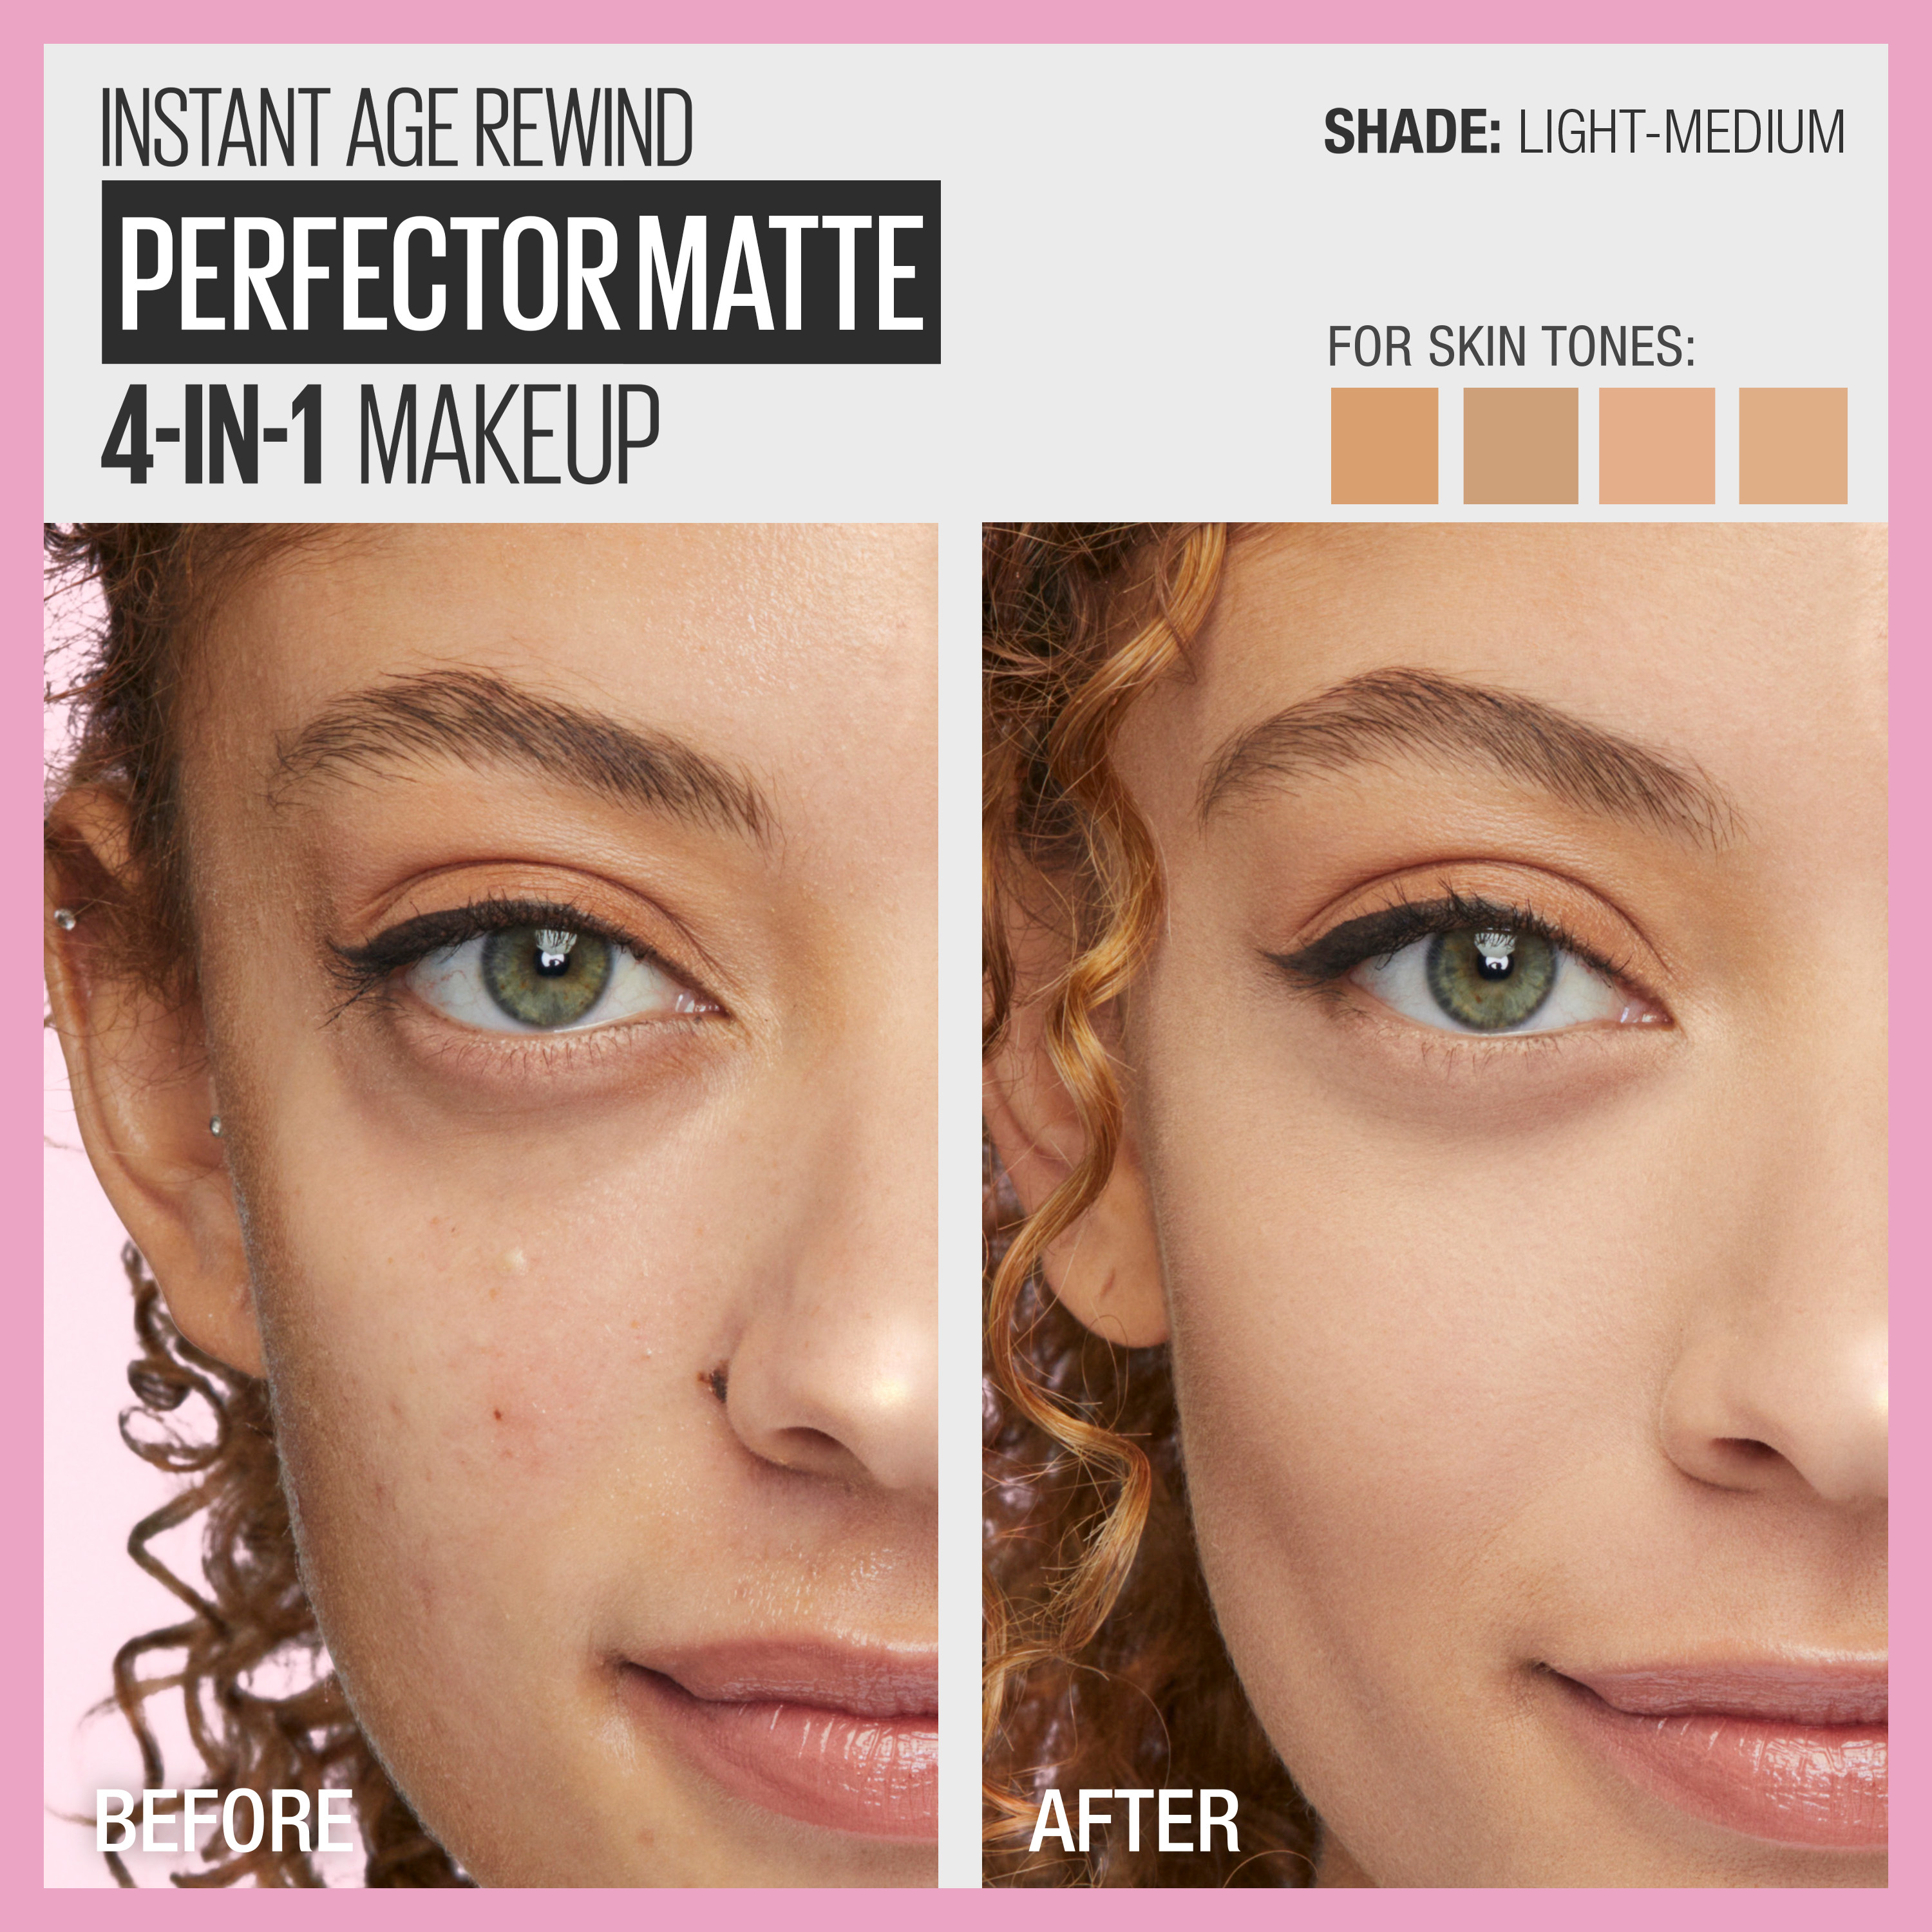 Maybelline Instant Age Rewind 4-In-1 Matte Foundation Makeup, Light/Medium, 1 fl oz - image 3 of 11